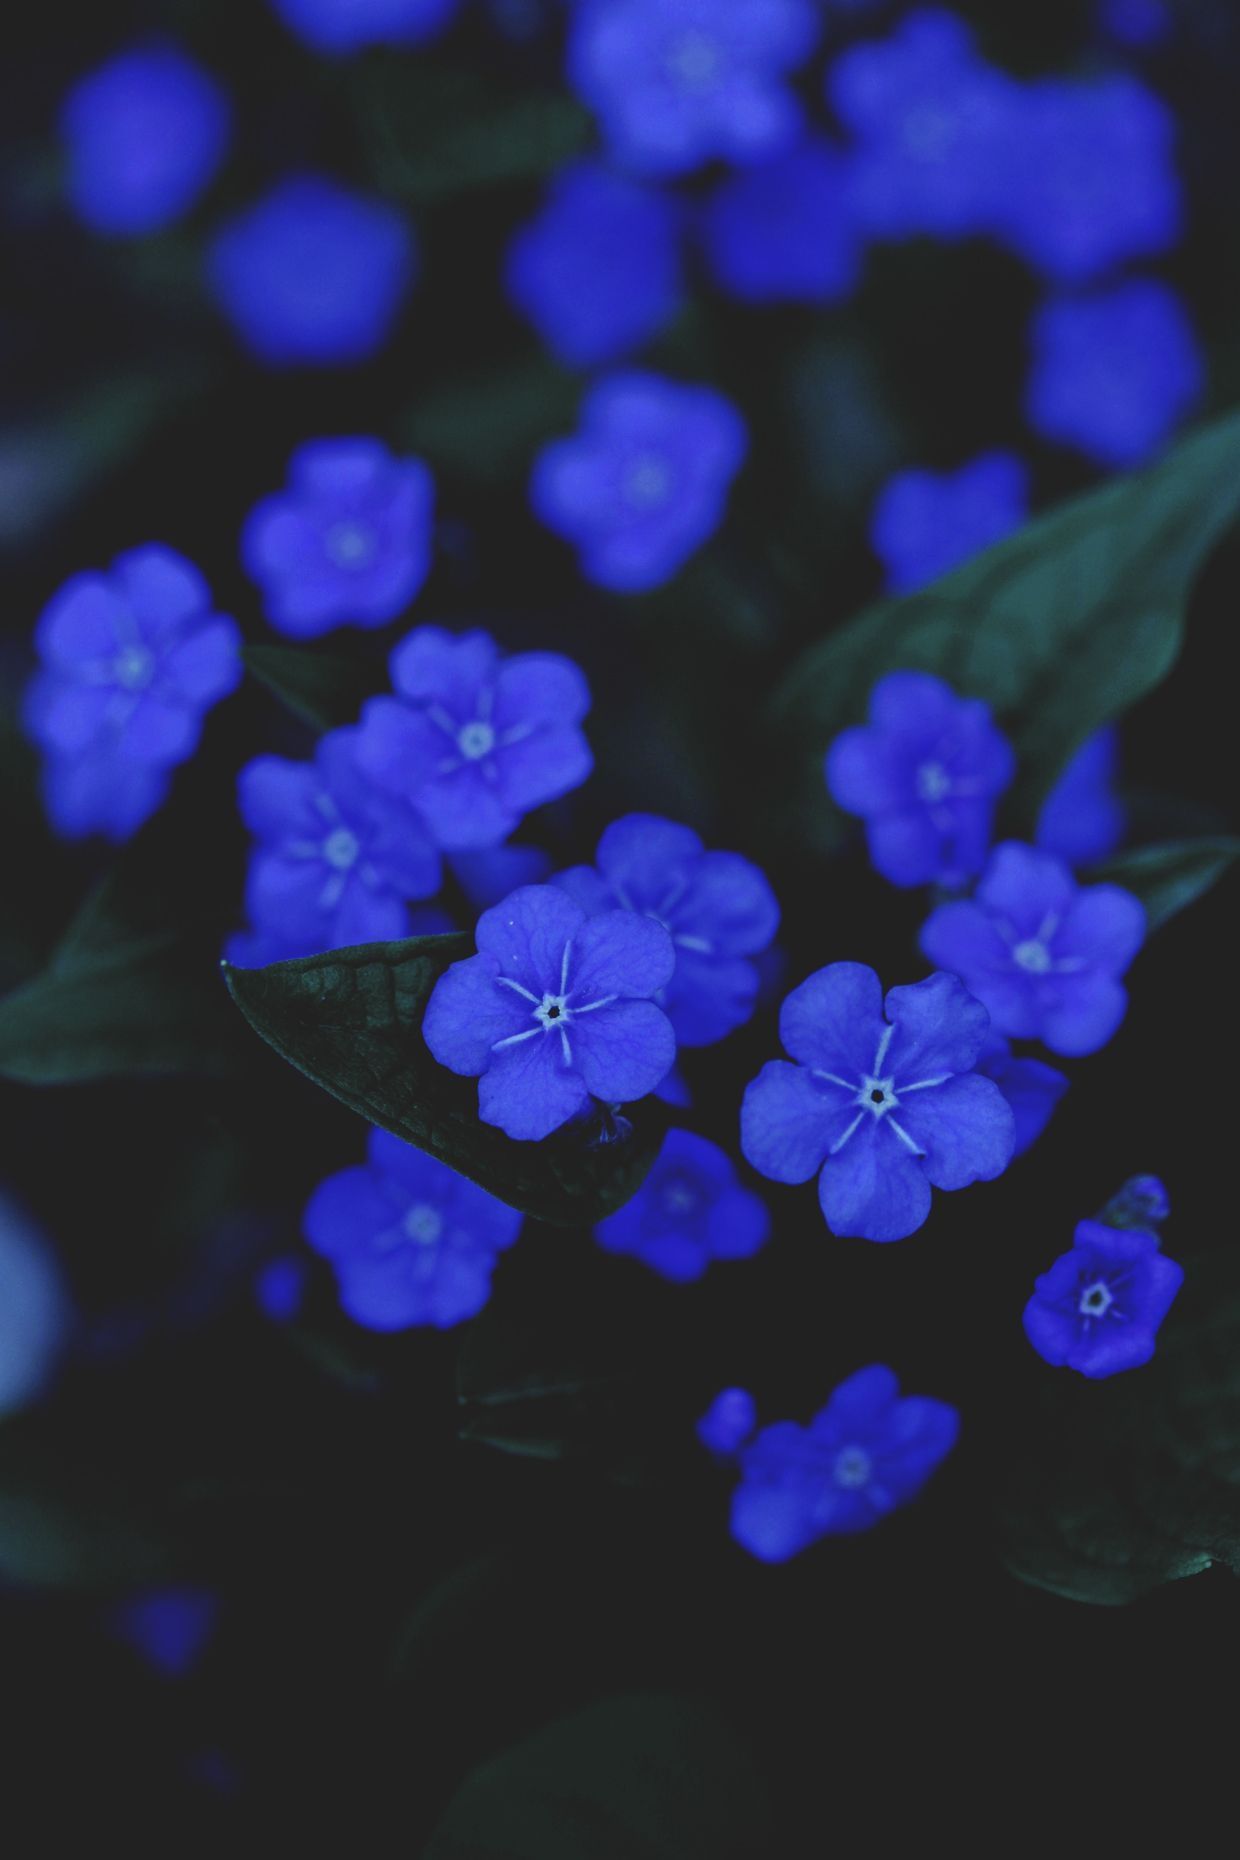 A close up of some blue flowers - Dark blue, navy blue